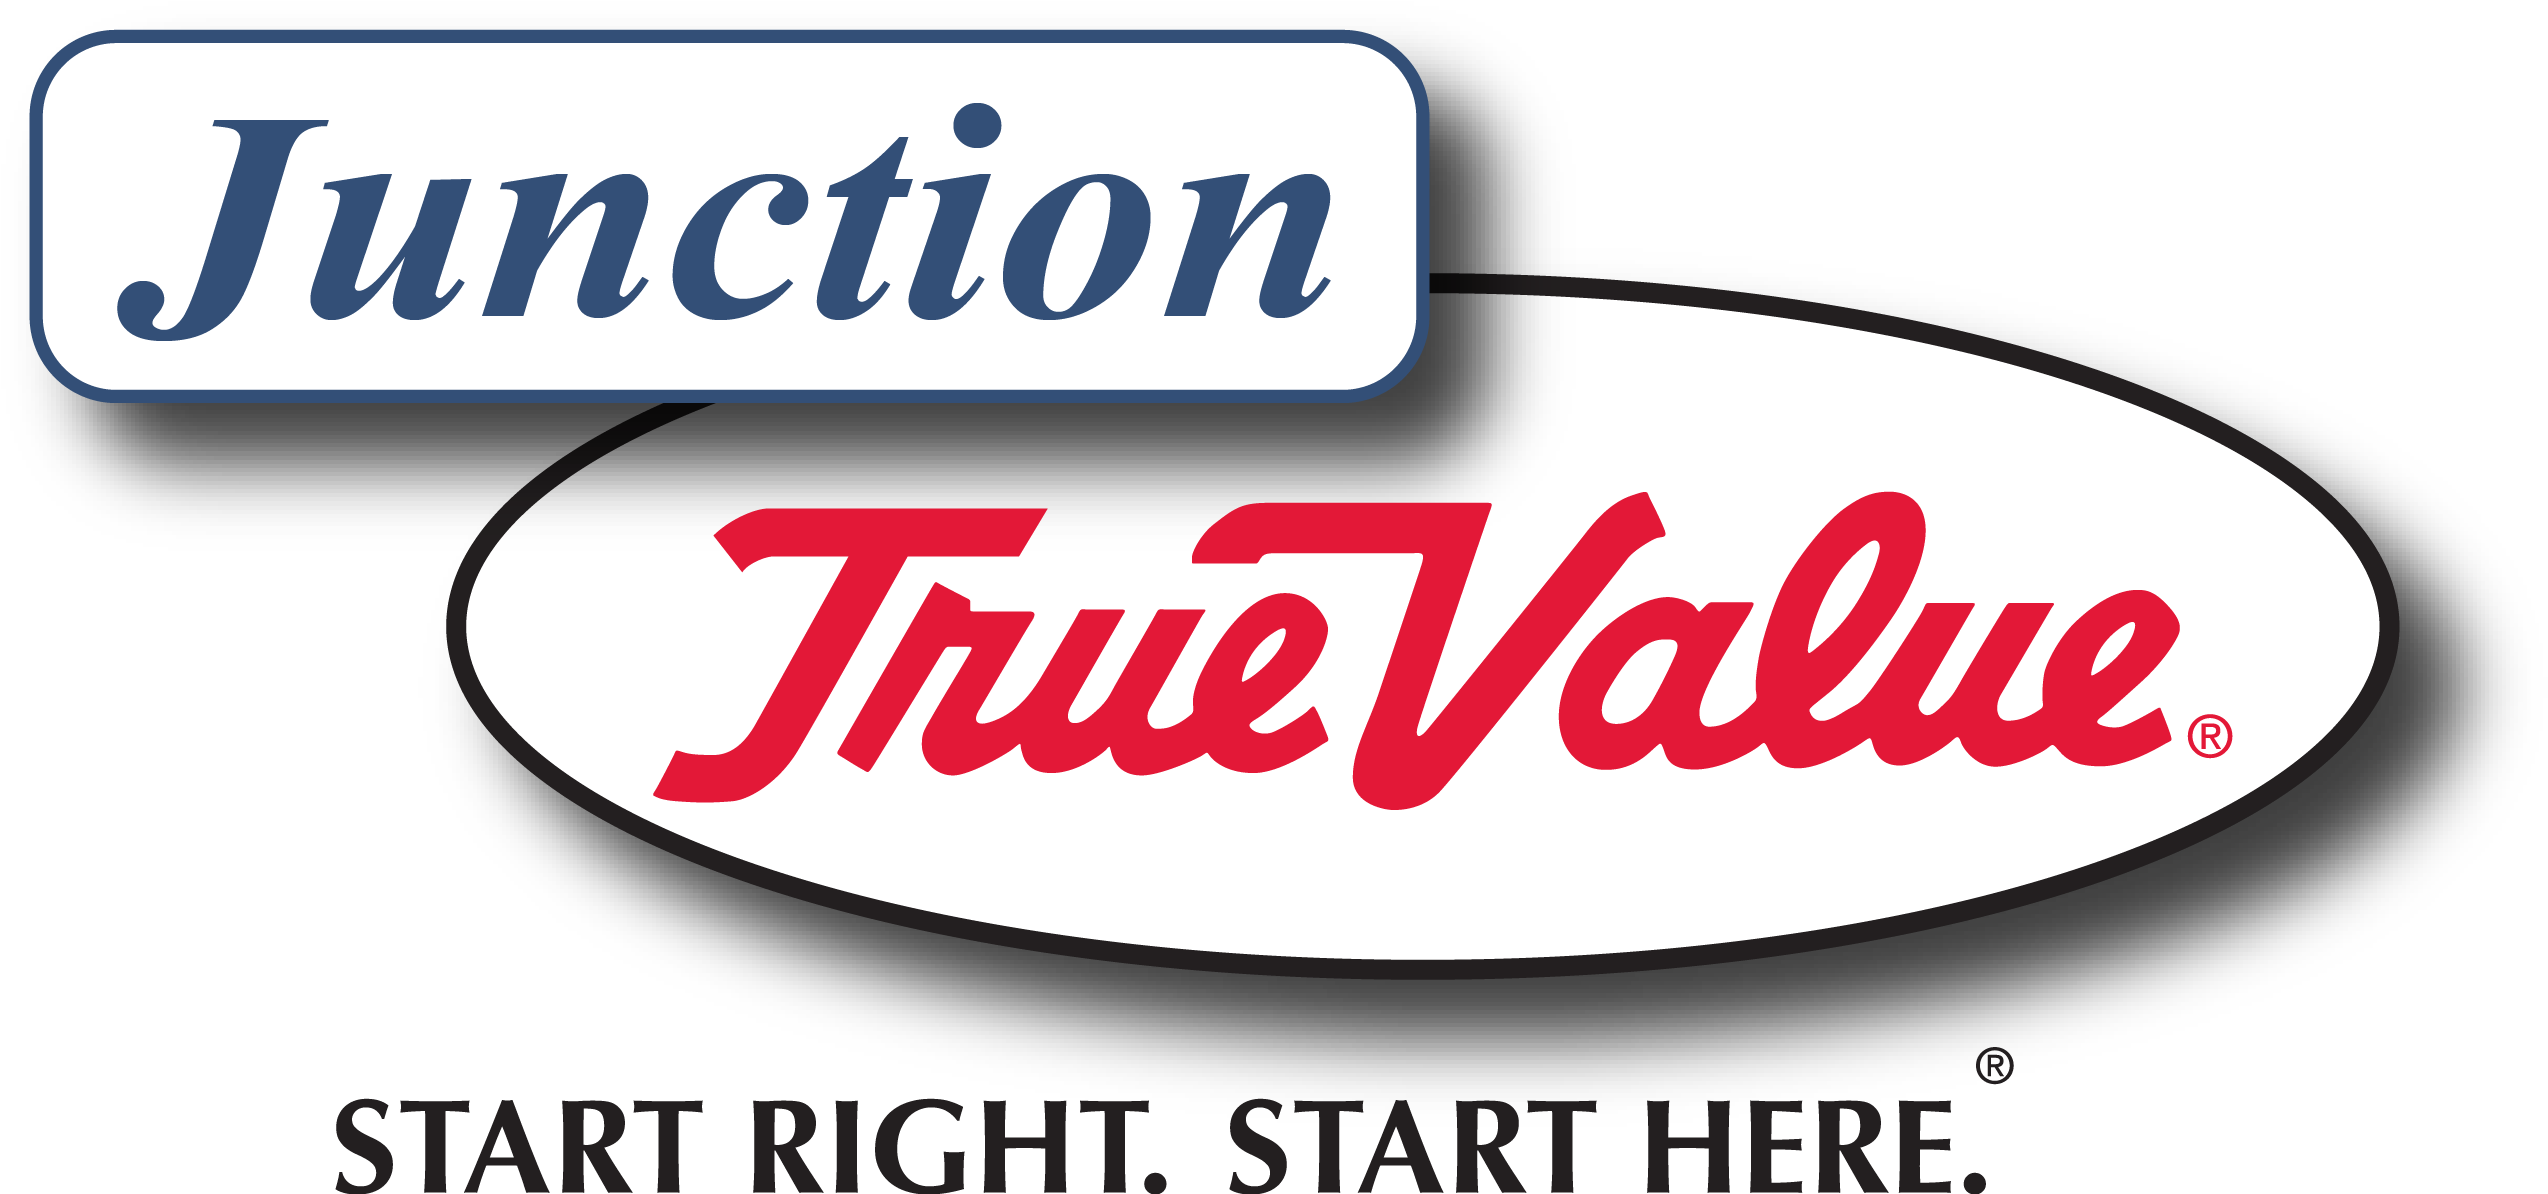 Events » Junction True Value Logo - True Value Hardware (2571x1205), Png Download